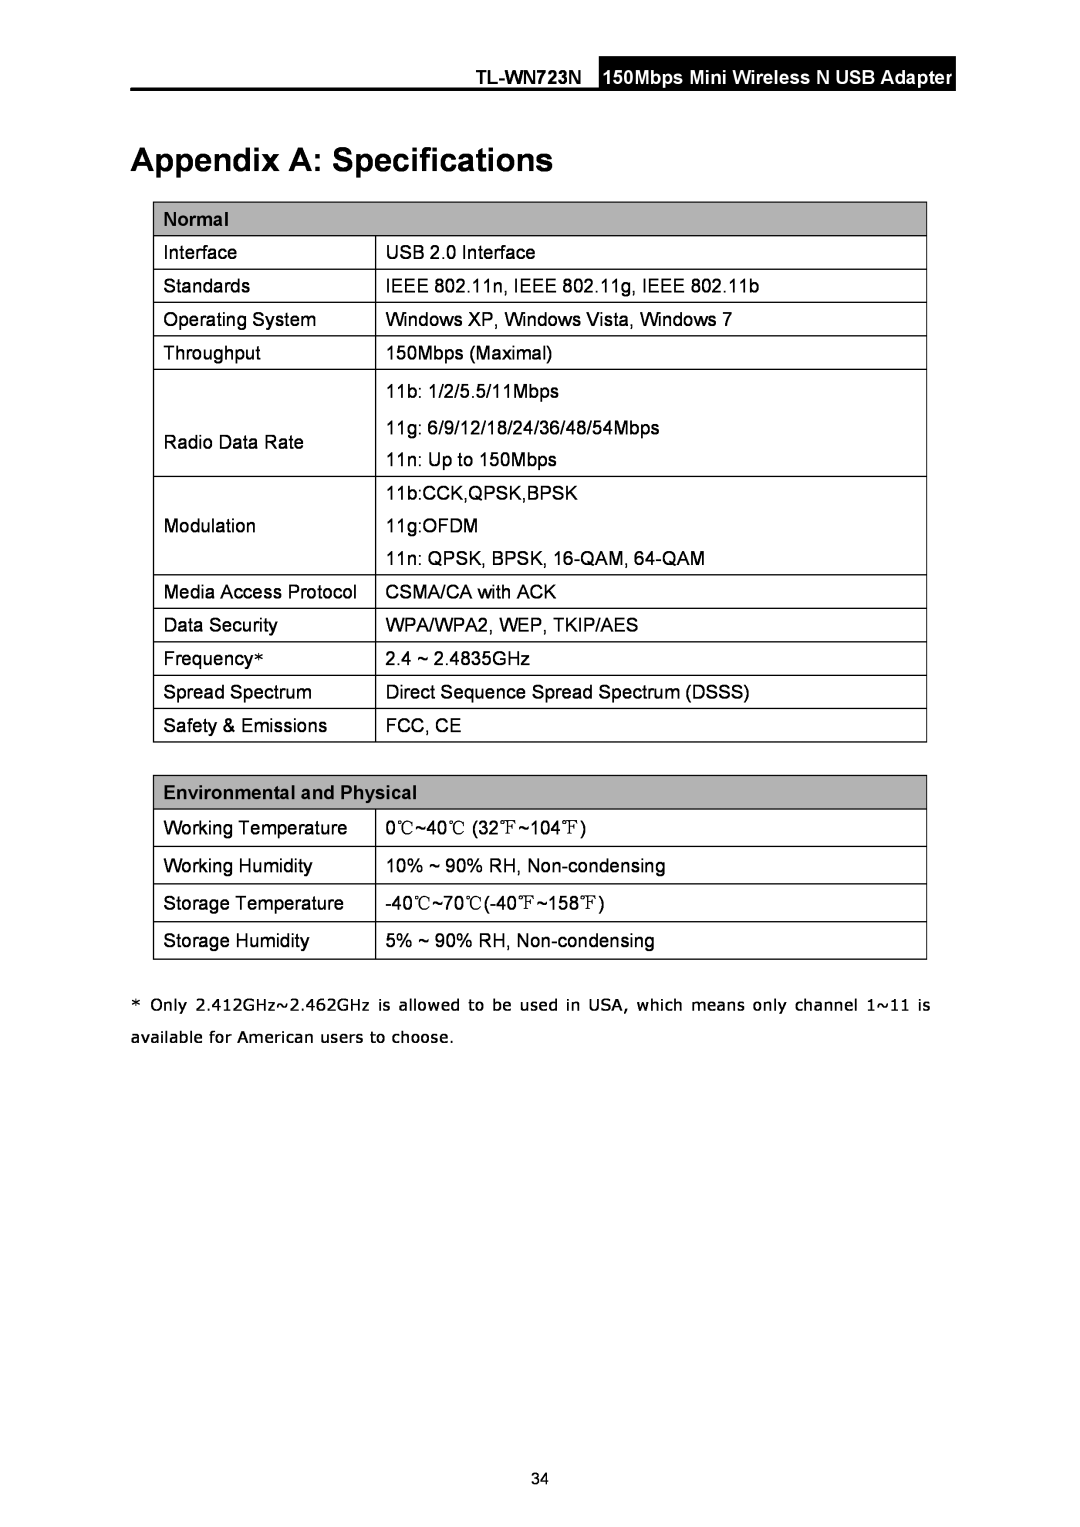 TP-Link TL-WN723N manual Appendix A Specifications 